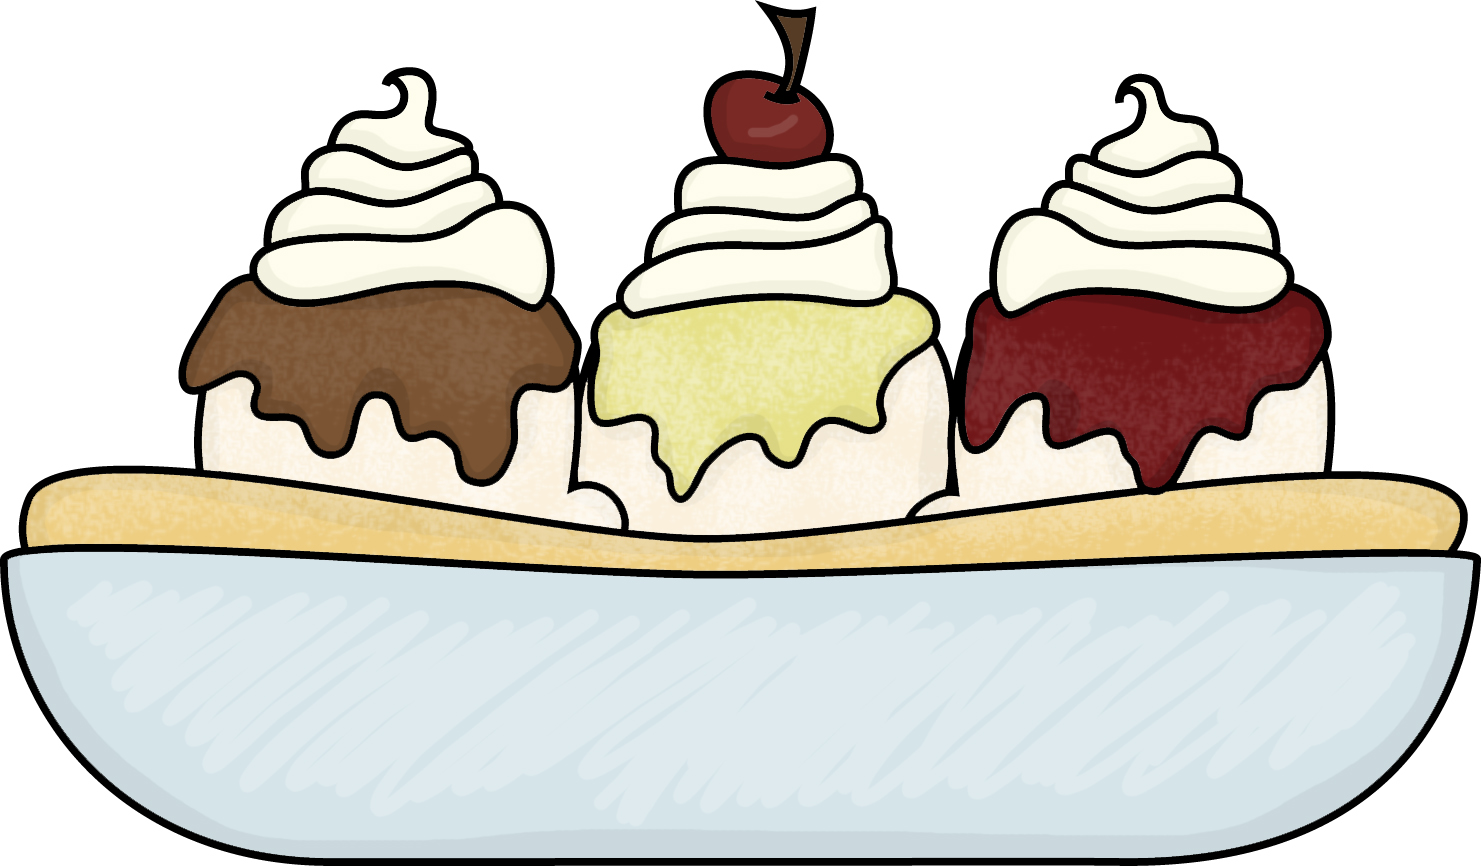 animated ice cream clipart - photo #48